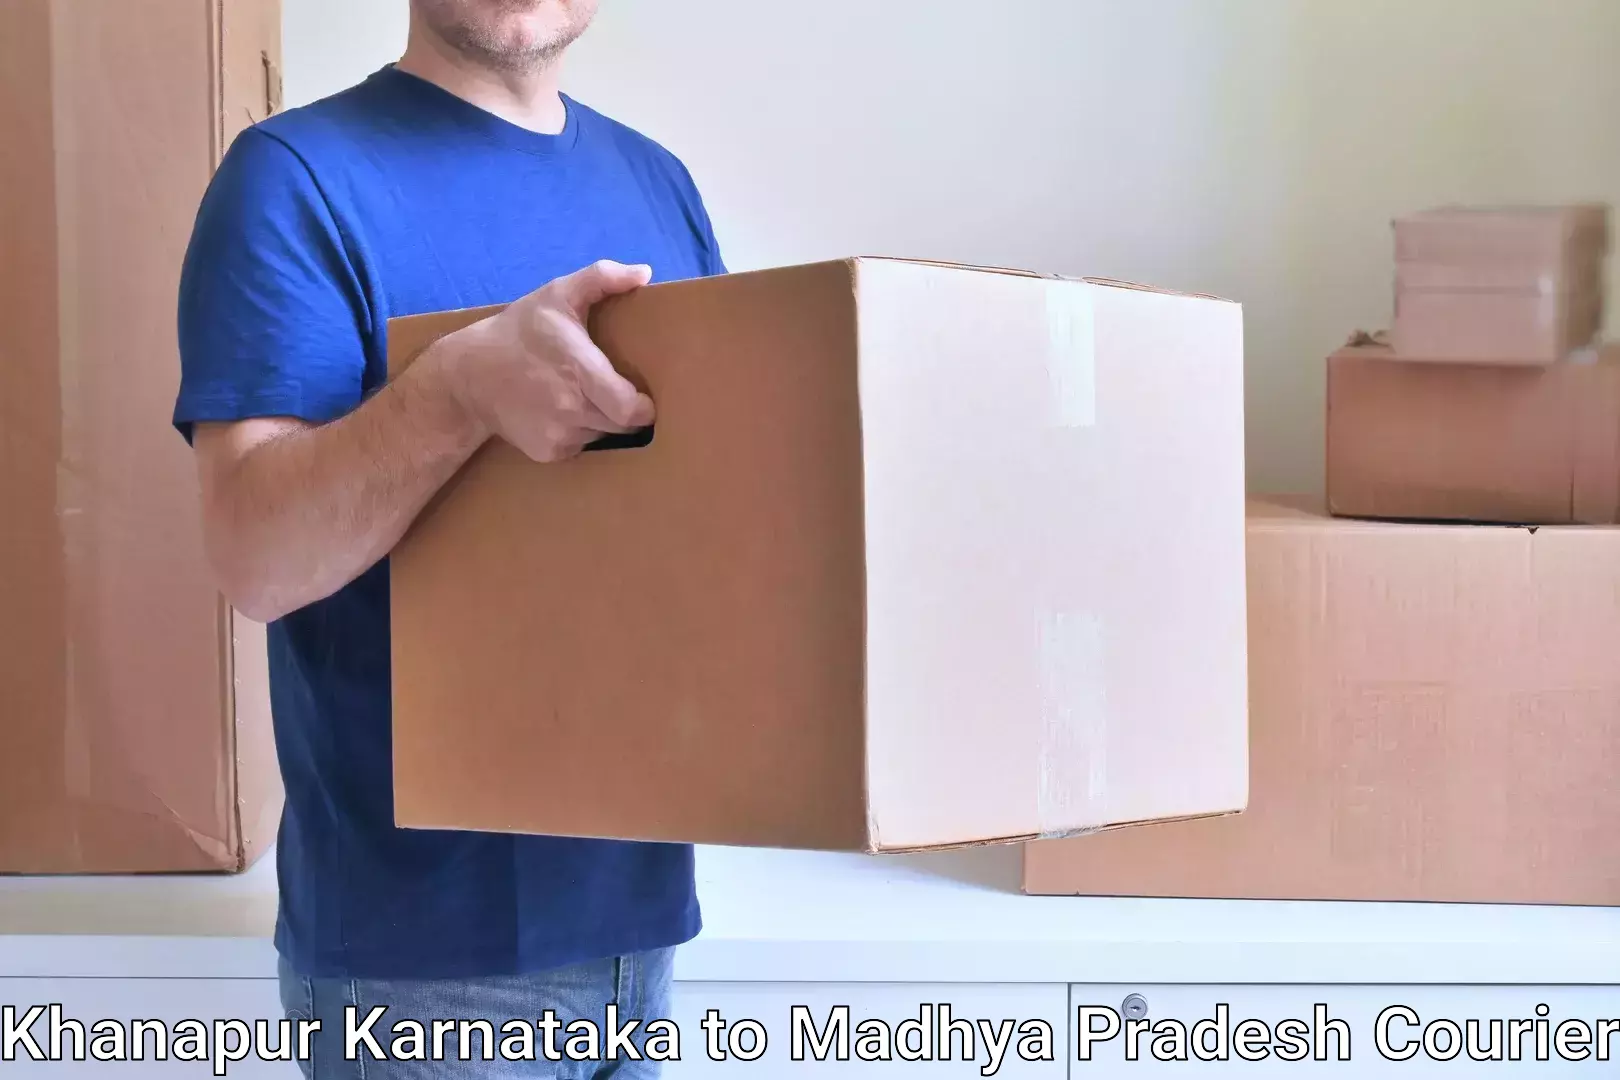 On-call courier service Khanapur Karnataka to Khajuraho